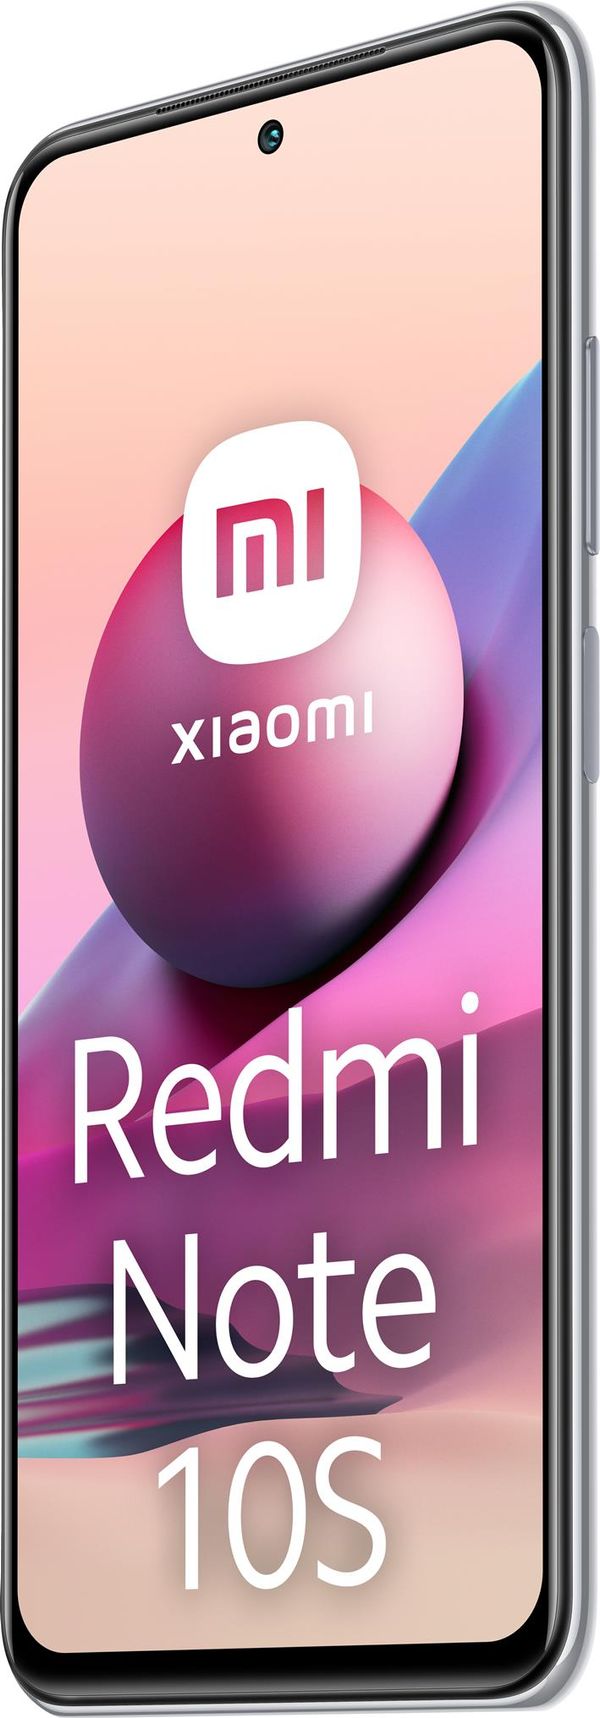 RE-951K7BN60004-PQ smartphone reacondicionado xiaomi redmi note 10s pebble white 6gb ram 128gb rom grado a